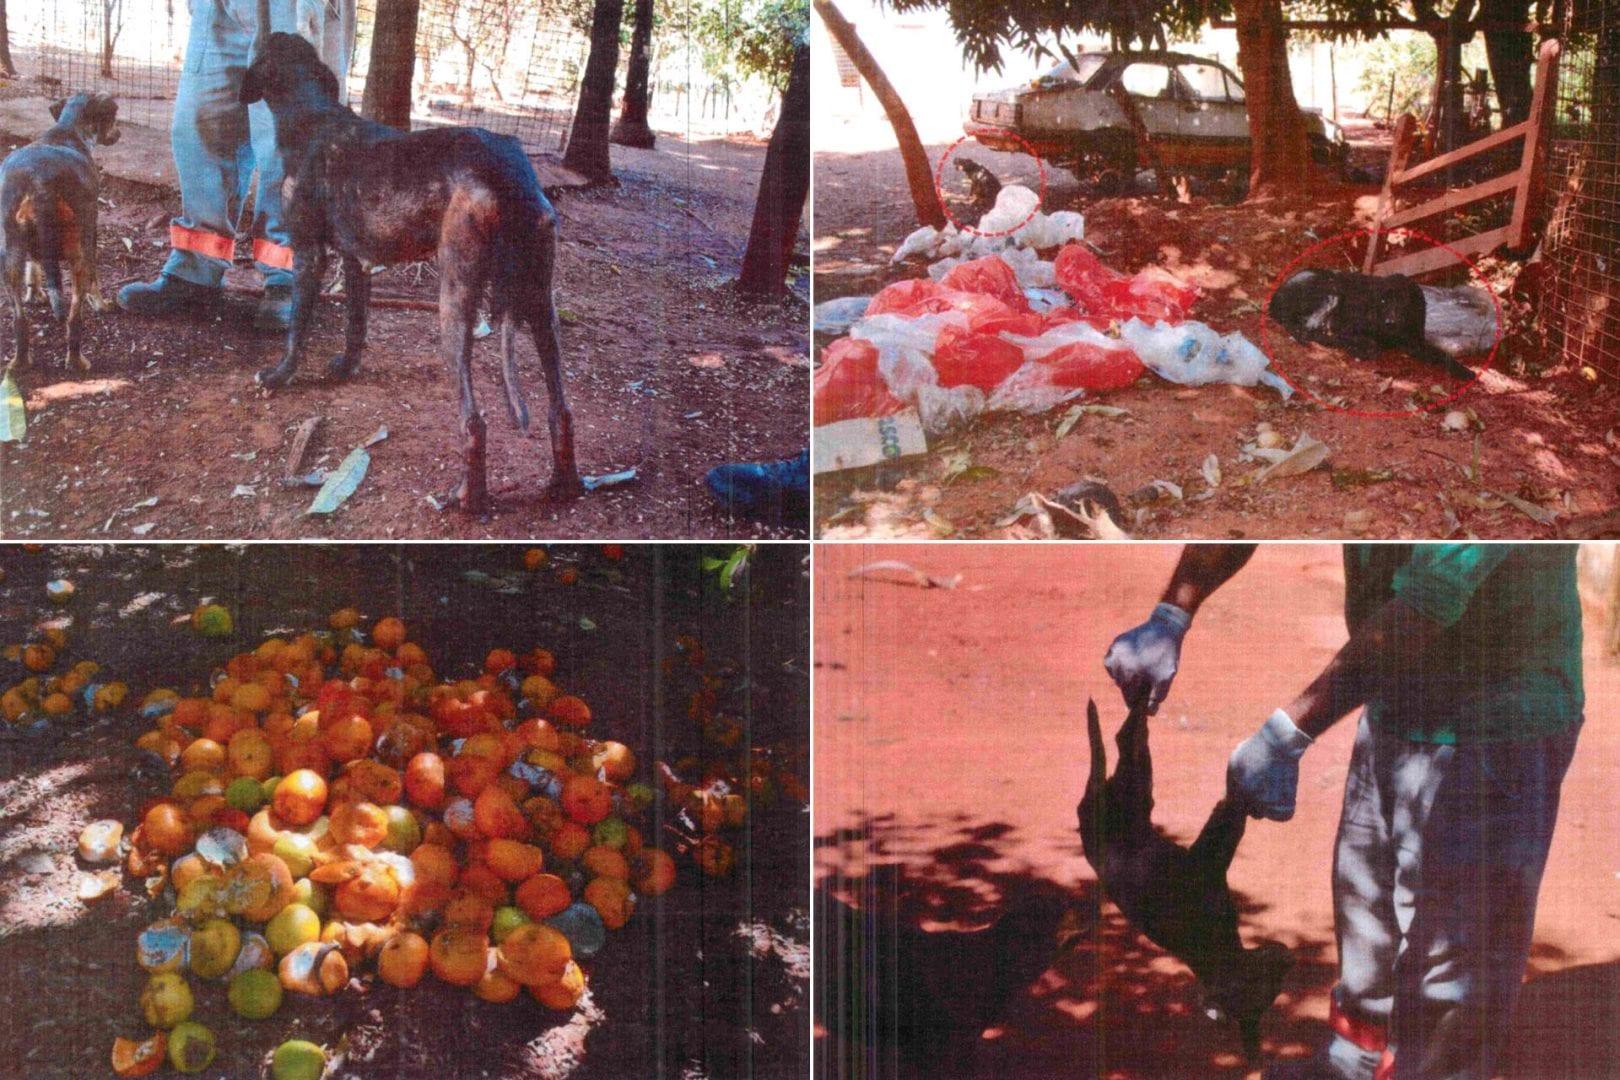 Centro de Zoonoses de Goianésia é acusado de maus-tratos a animais